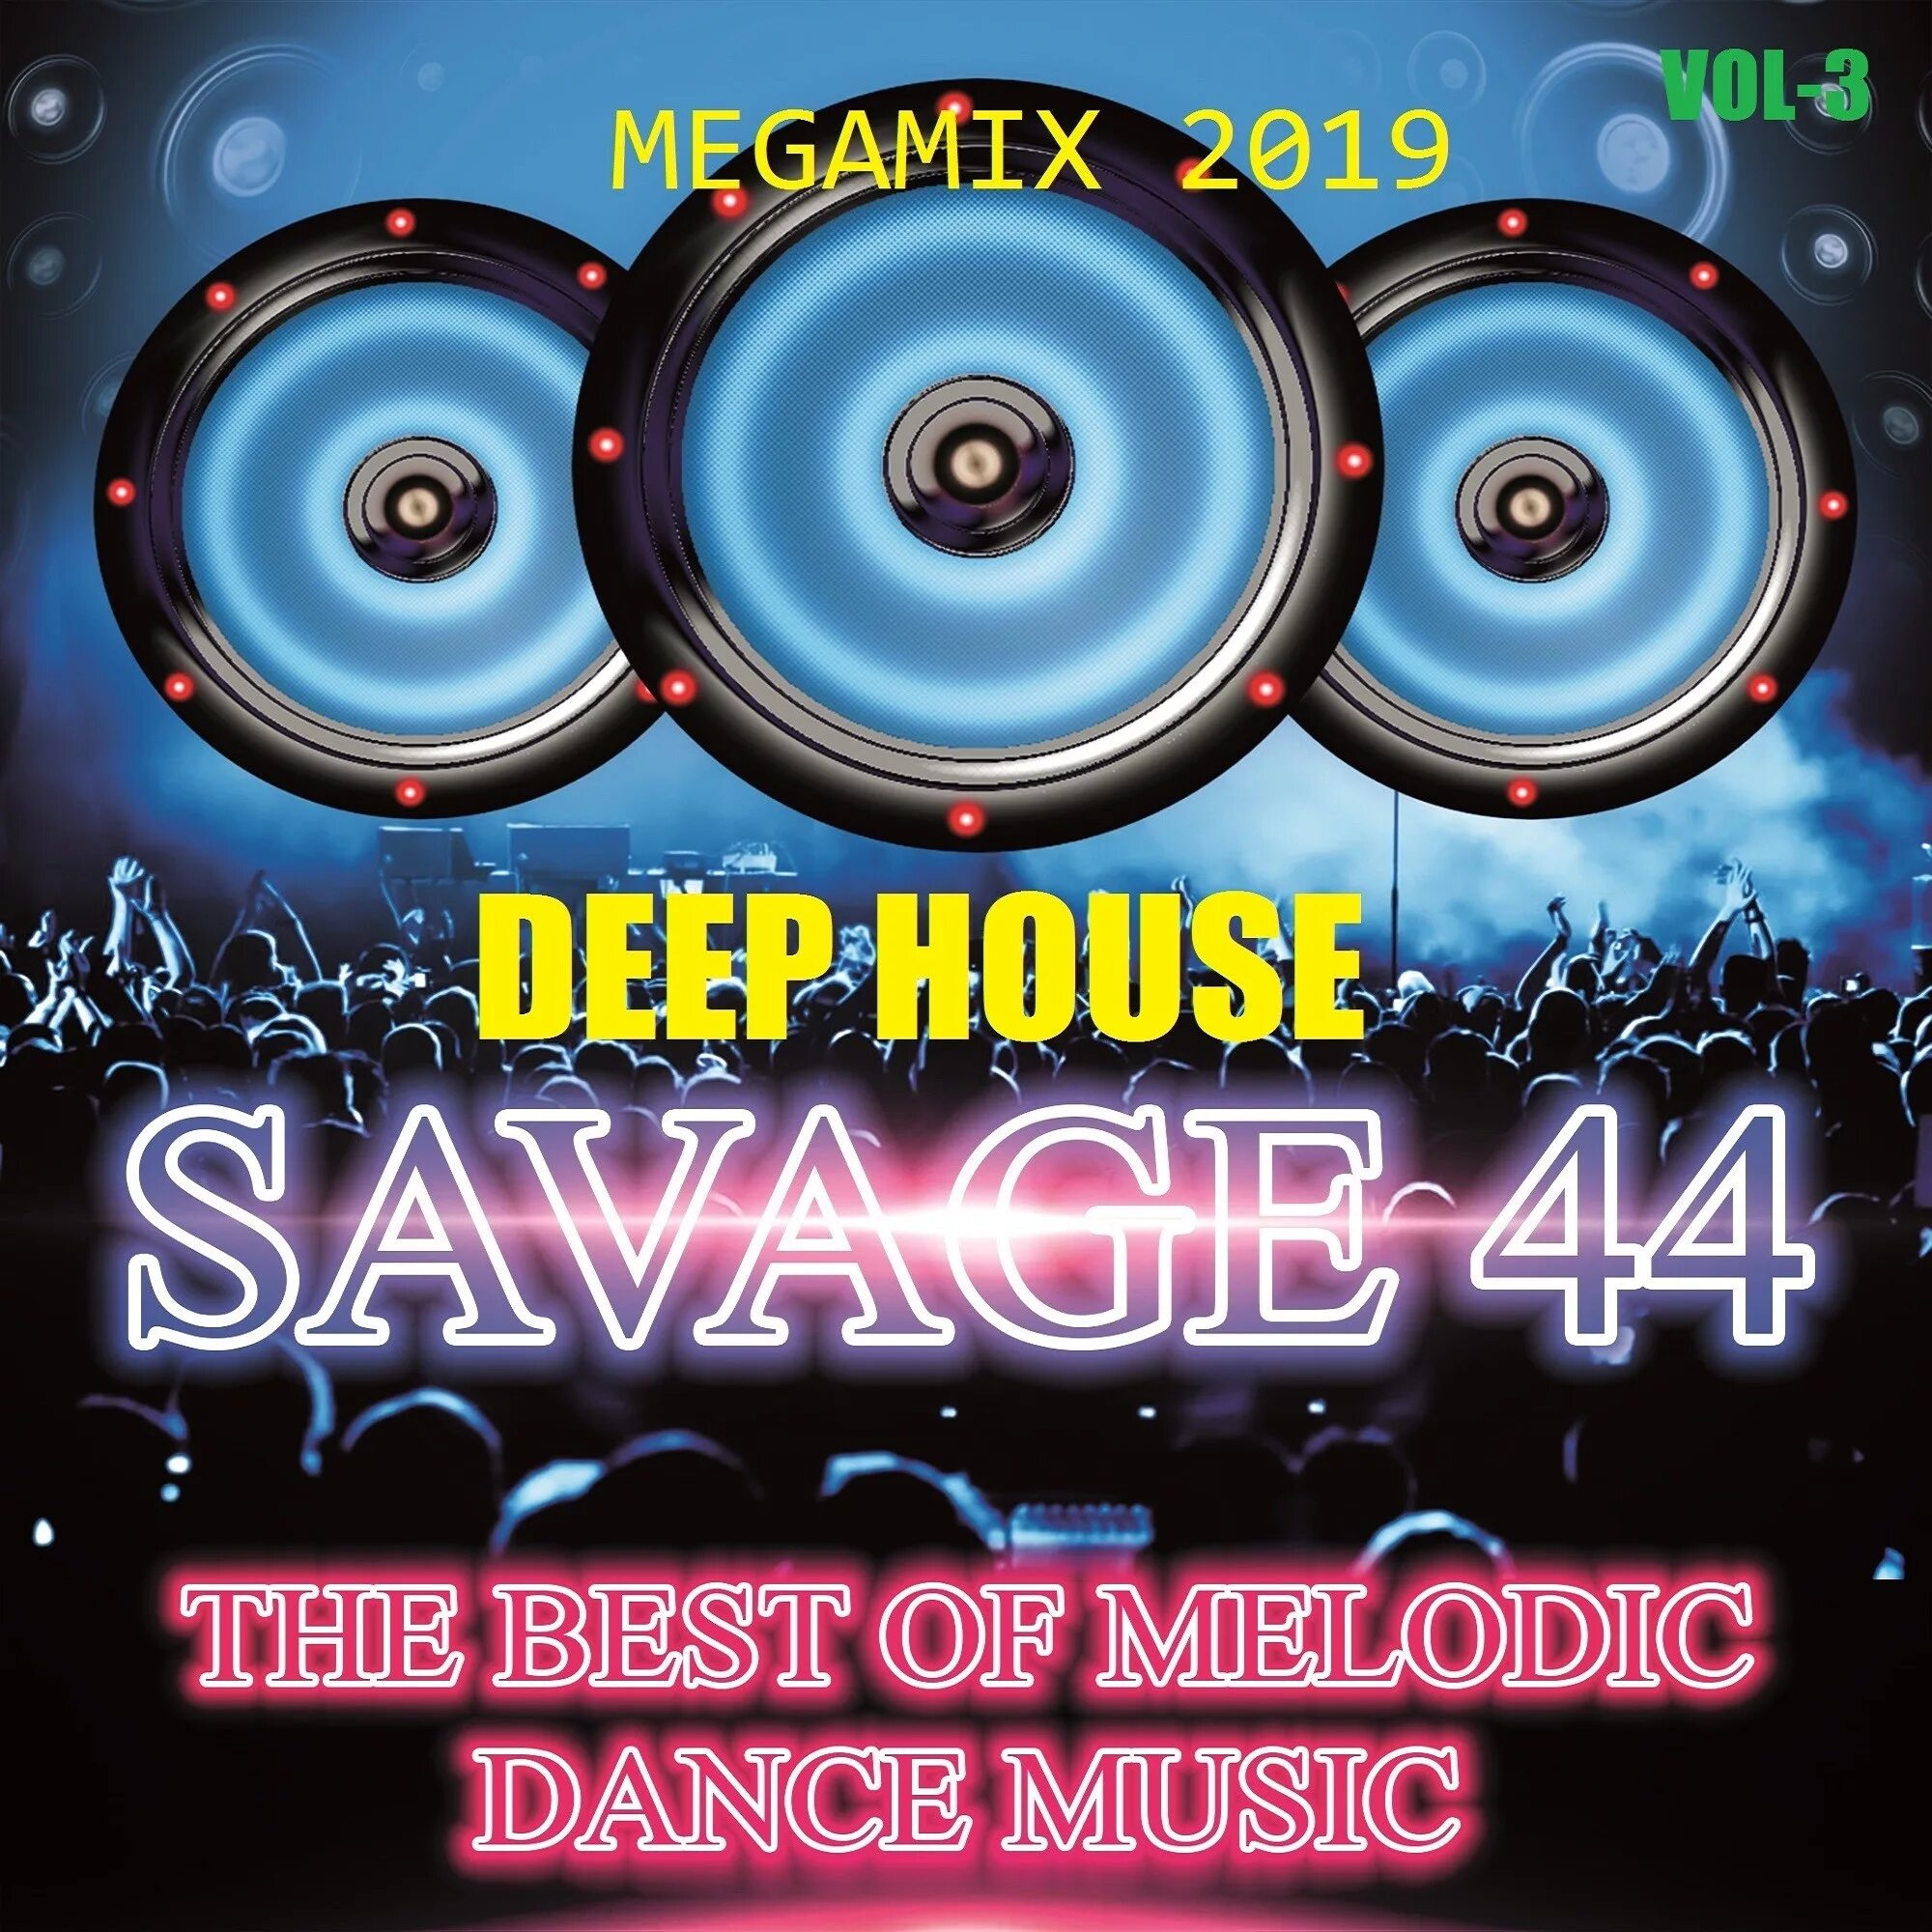 Диджей вал. Саваж 44 (RMX 2020) ignition. DJ Savage 44. Диджей вал диско.